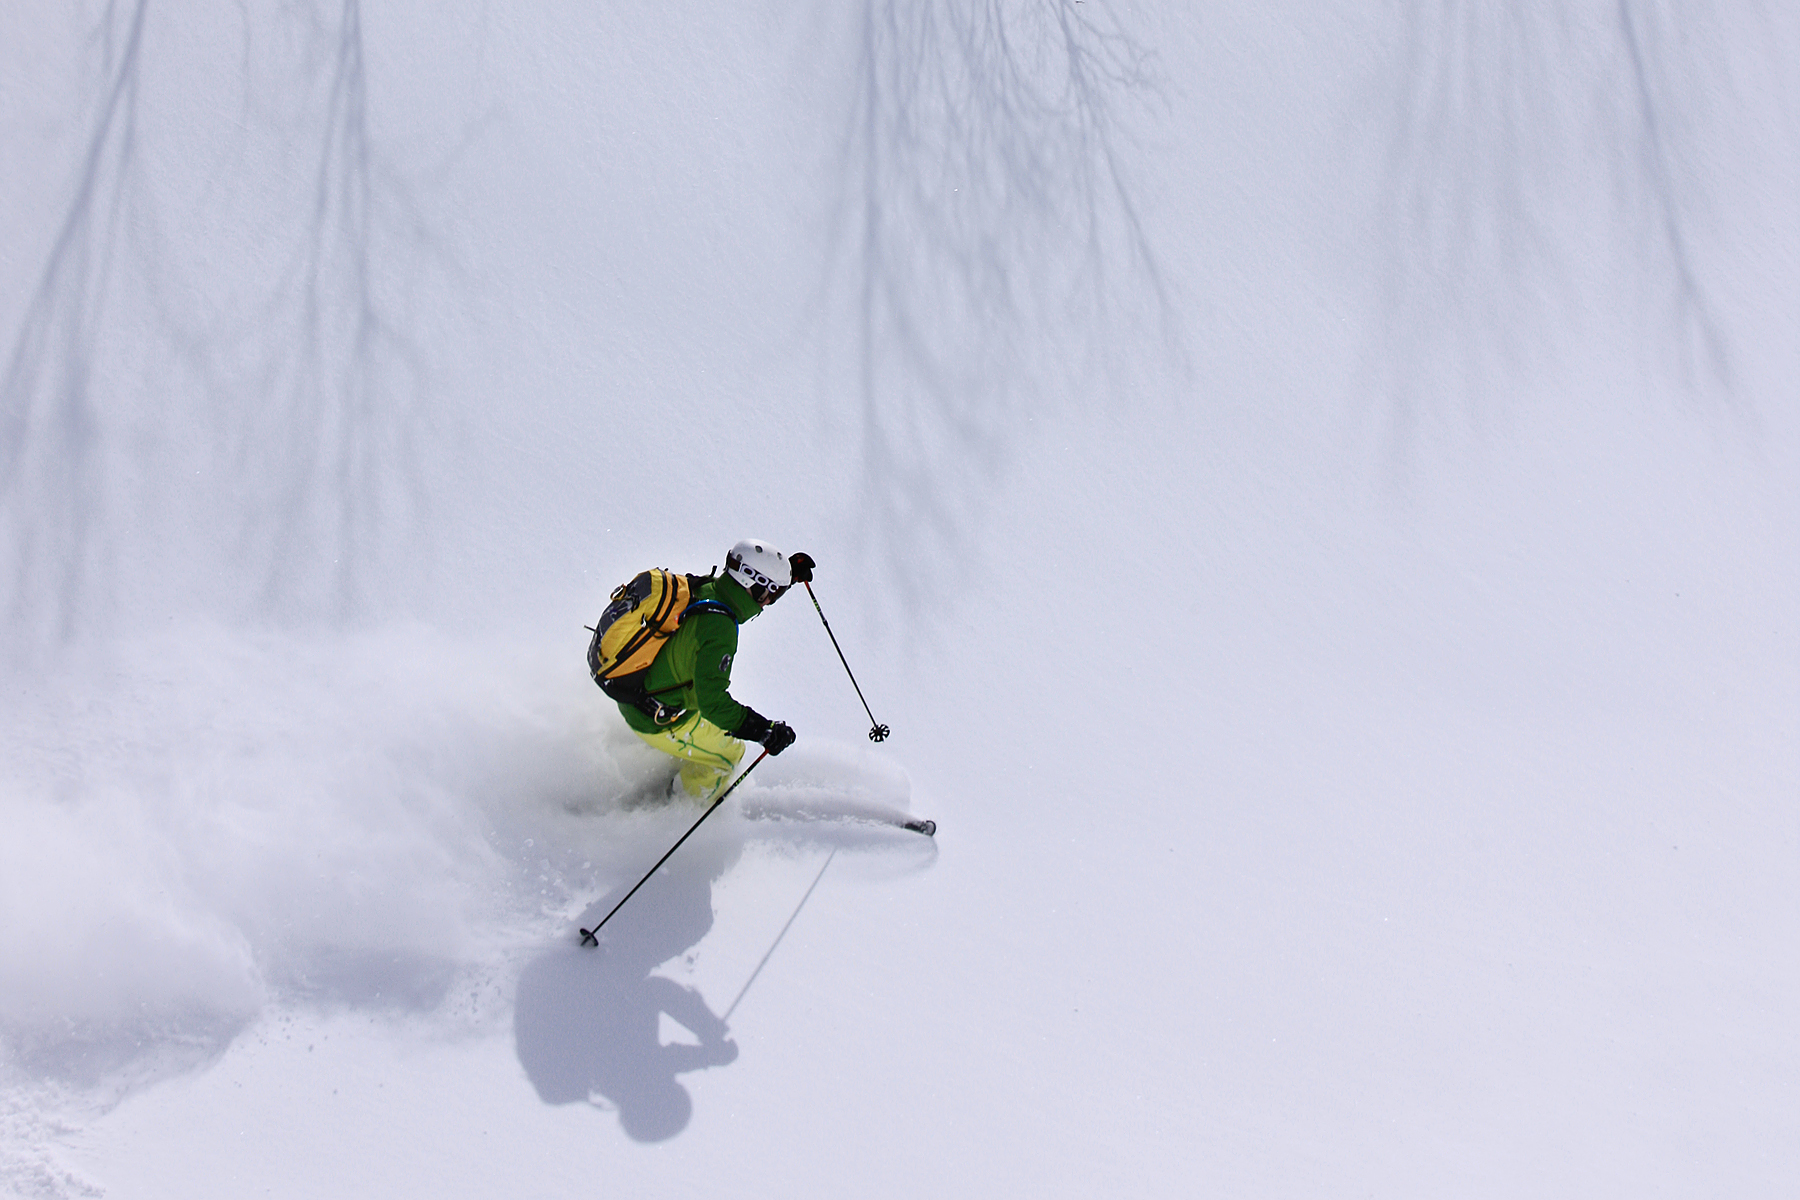 Anders Sjberg skiing in Annupuri. Photo: Henrik Bonnevier 